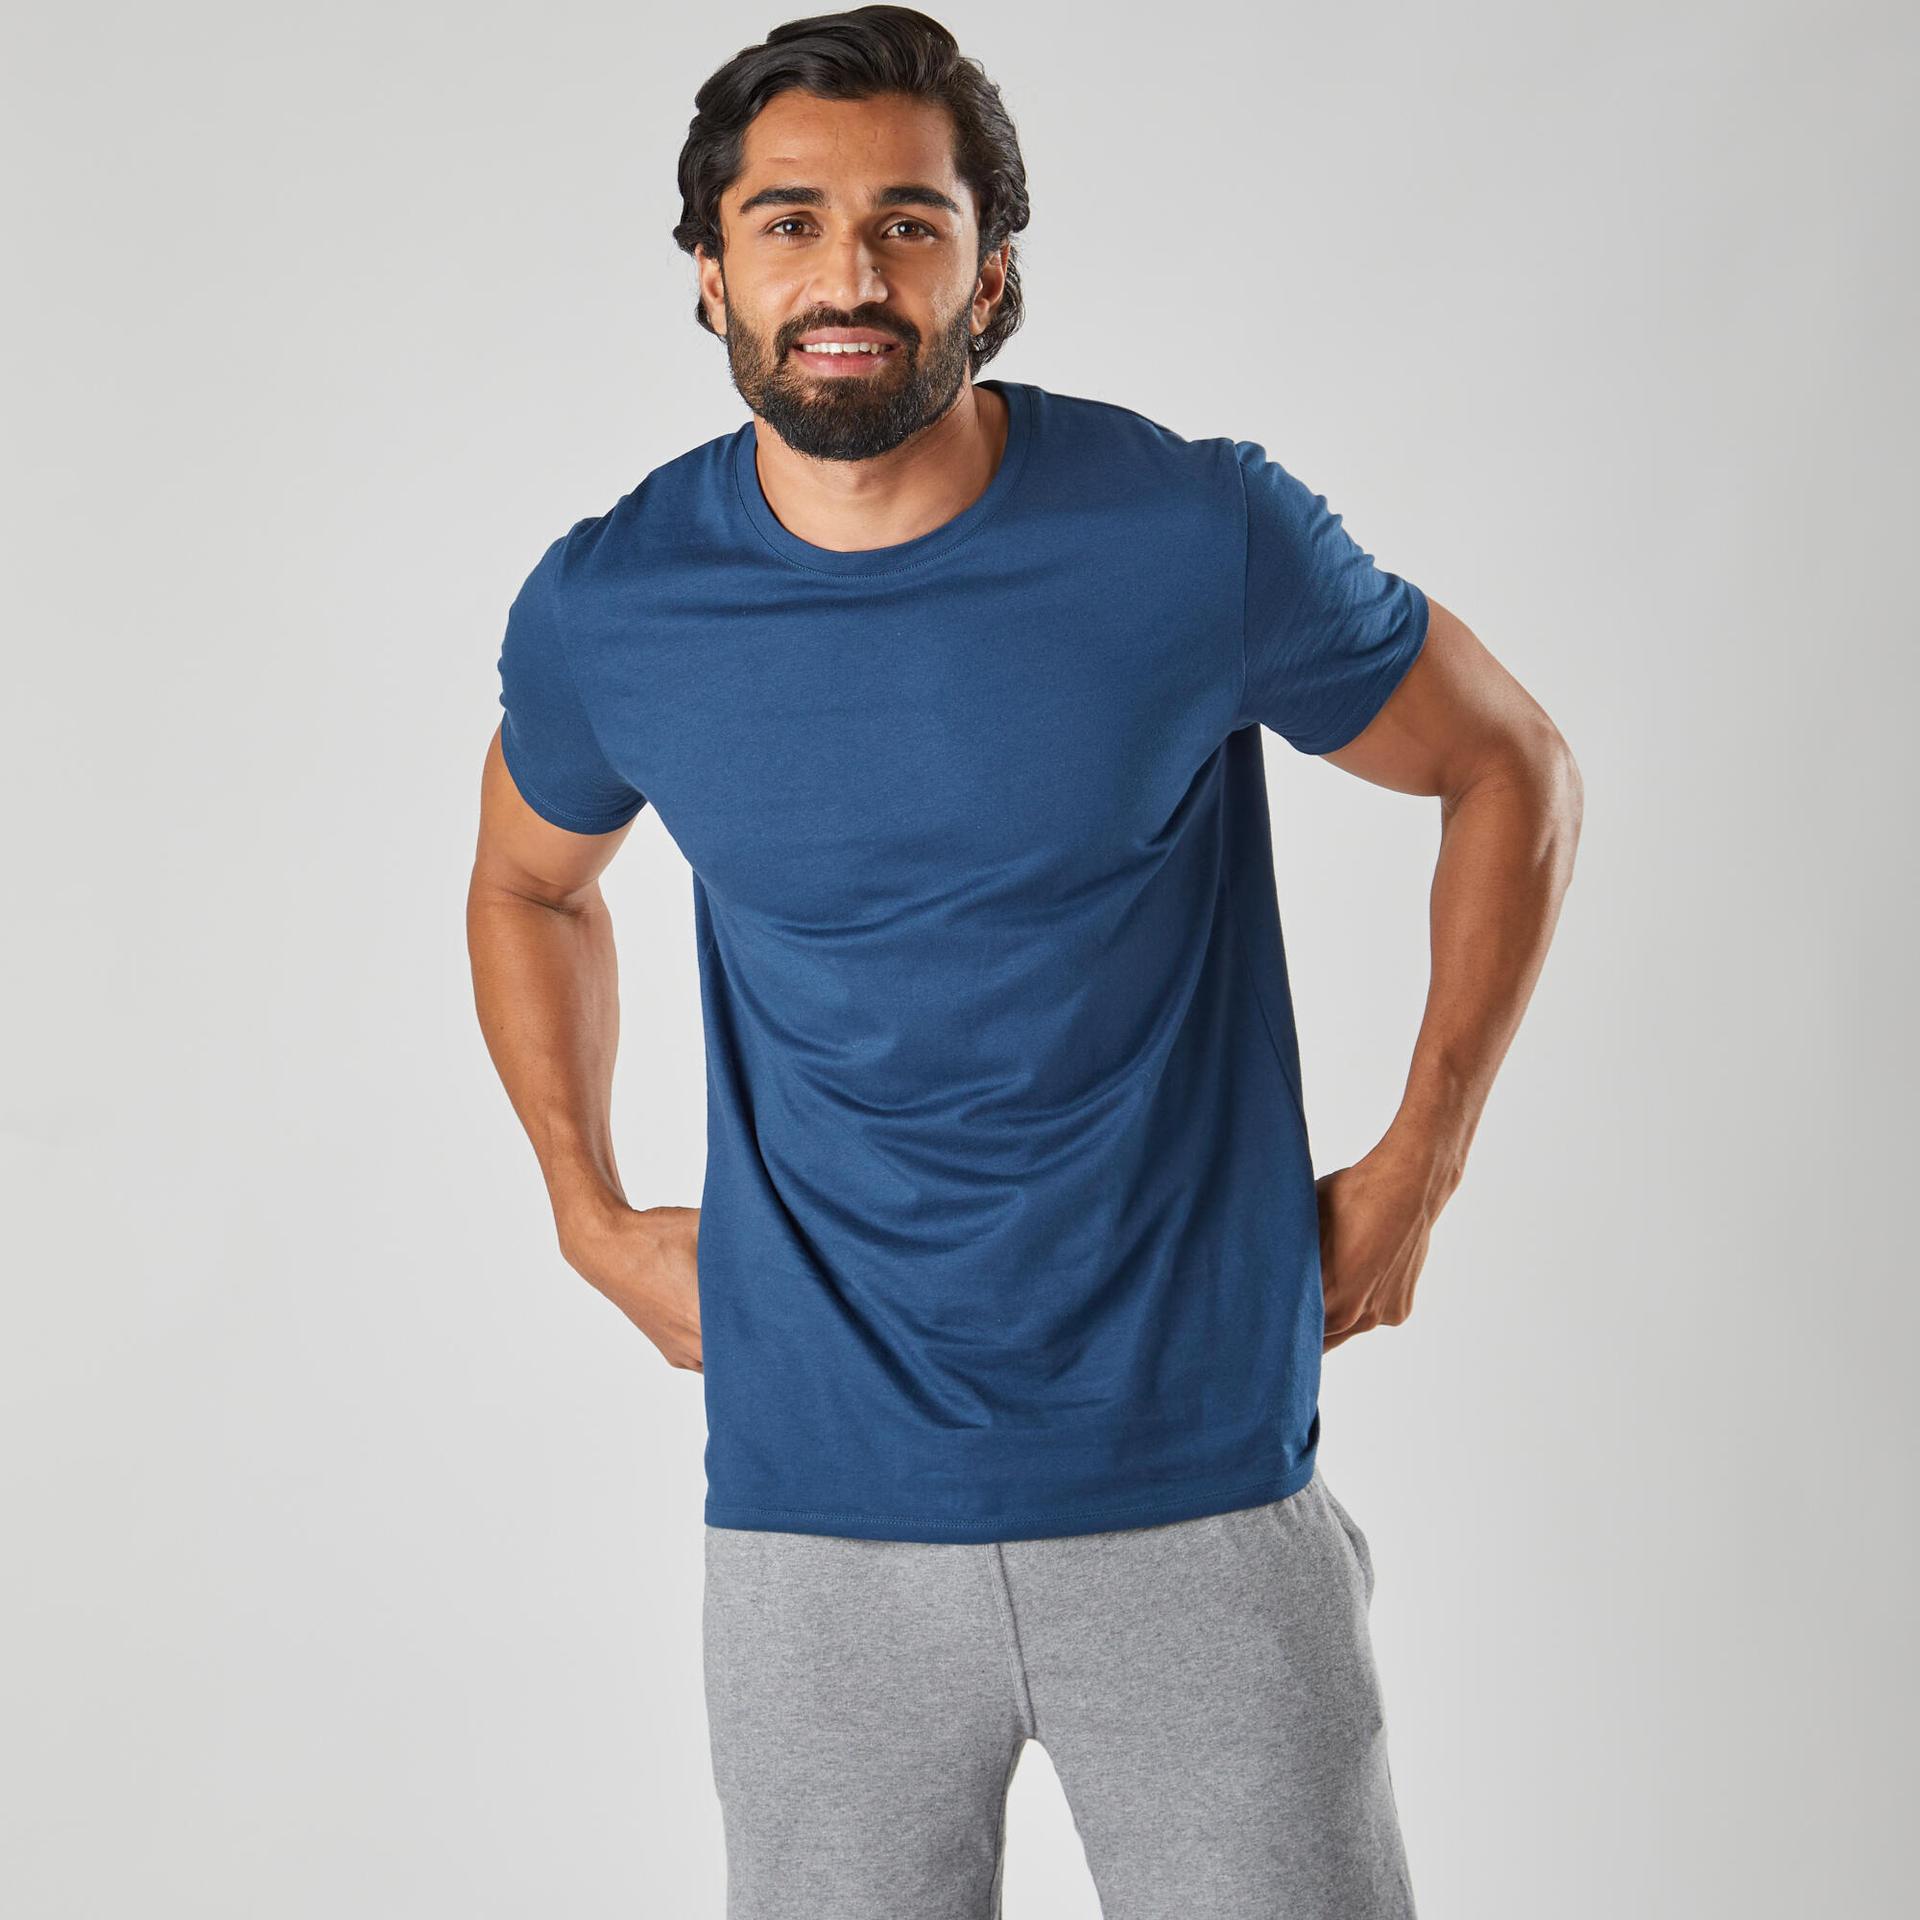 men's-cotton-gym-t-shirt-regular-fit-athletee-100---blue